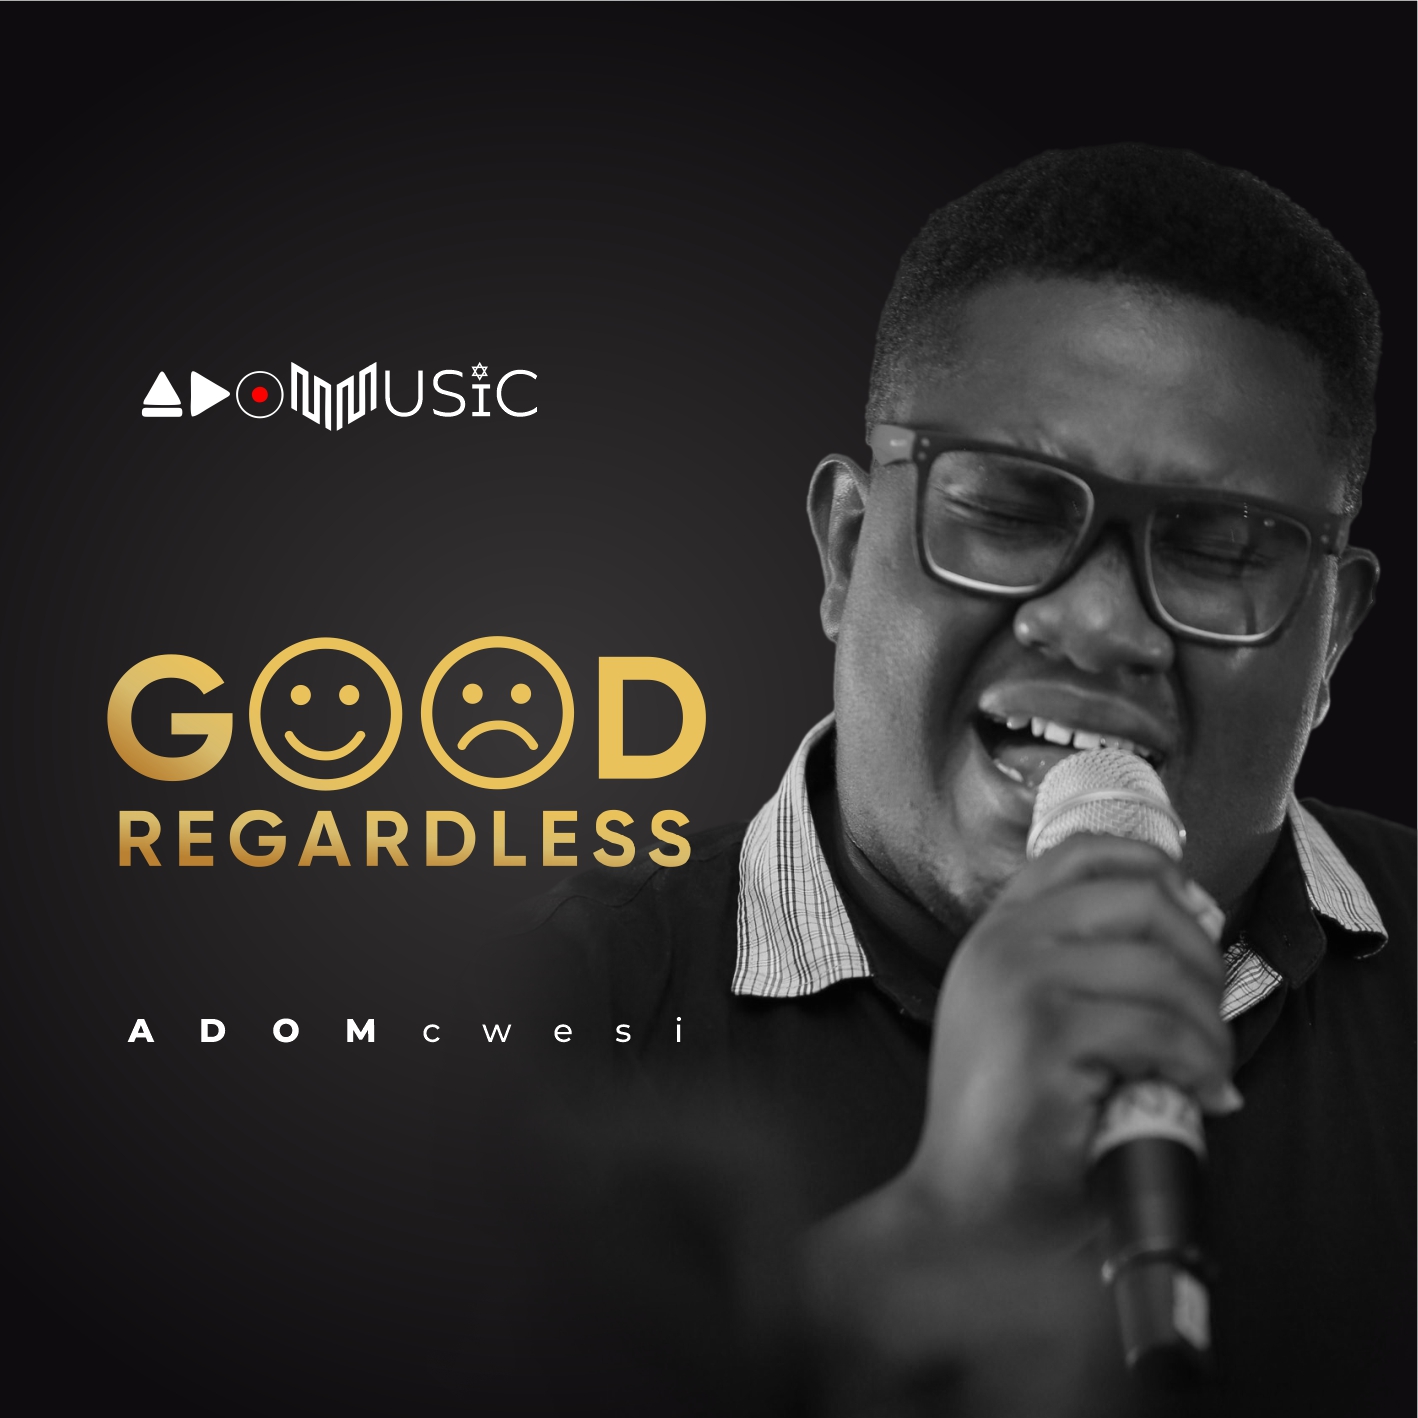 Listen Up: ADOMcwesi 's 'This Is Gospel' & 'Good Regardless' inspires